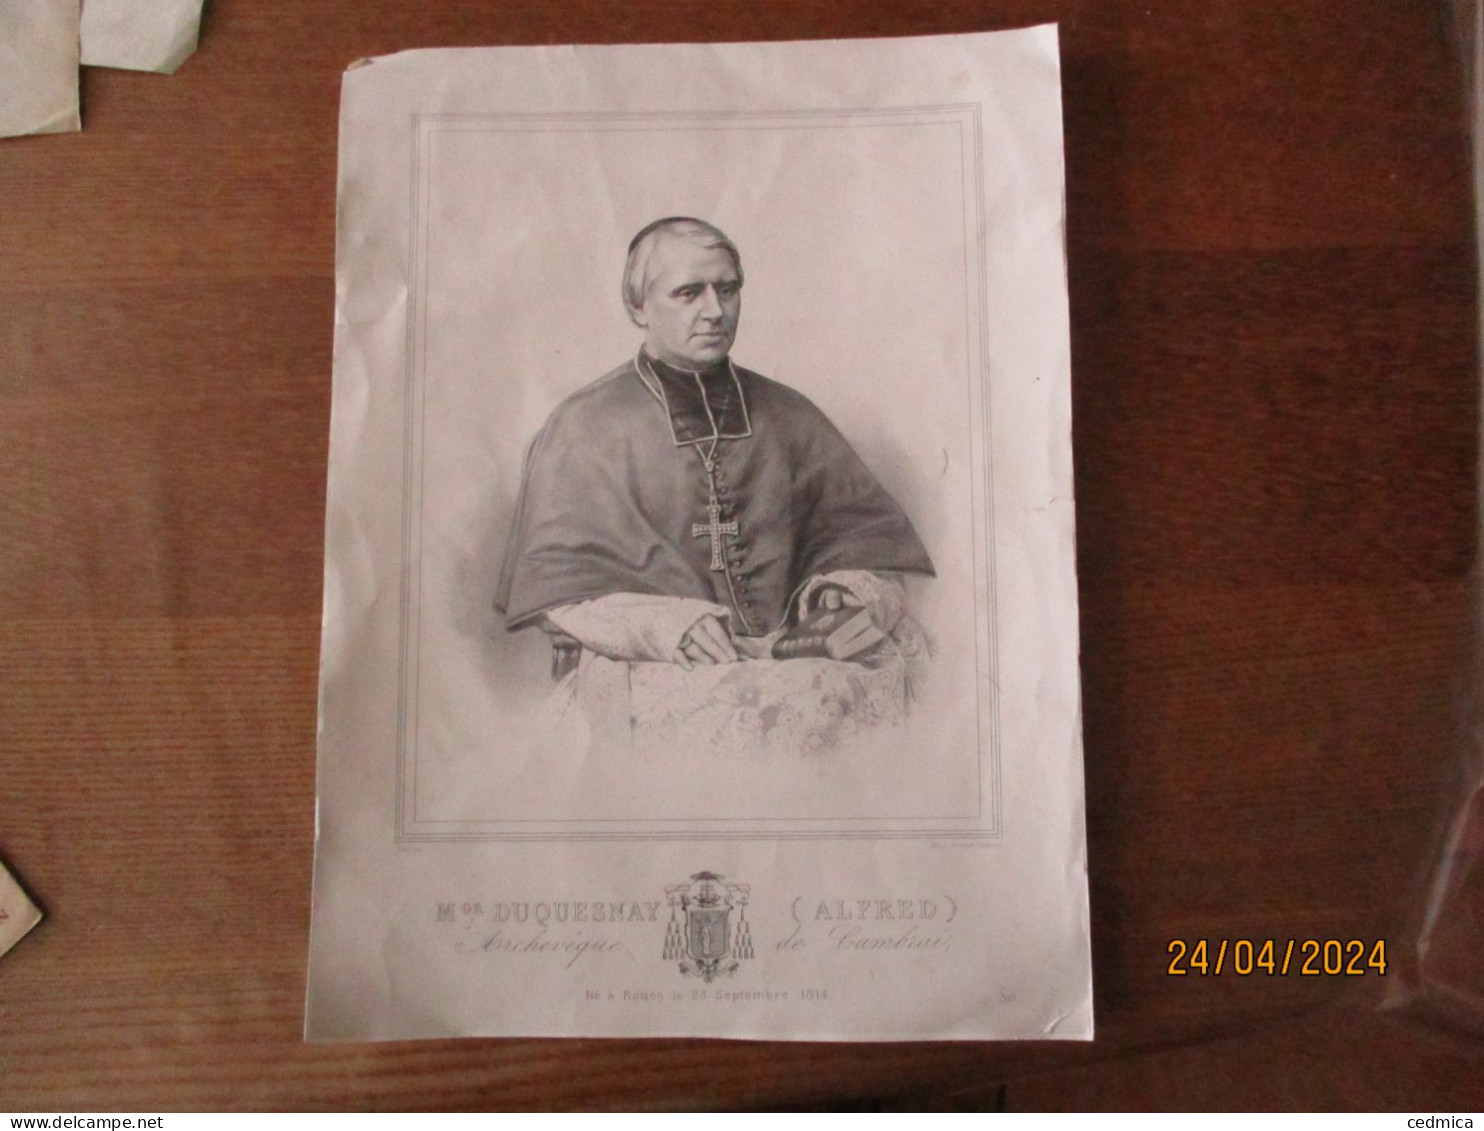 Mgr DUQUESNAY (ALFRED) ARCHEVÊQUE DE CAMBRAI NE A ROUEN LE 23 SEPTEMBRE 1814 LITH.J.RENANT CAMBRAI 36cm/26cm - Religione & Esoterismo